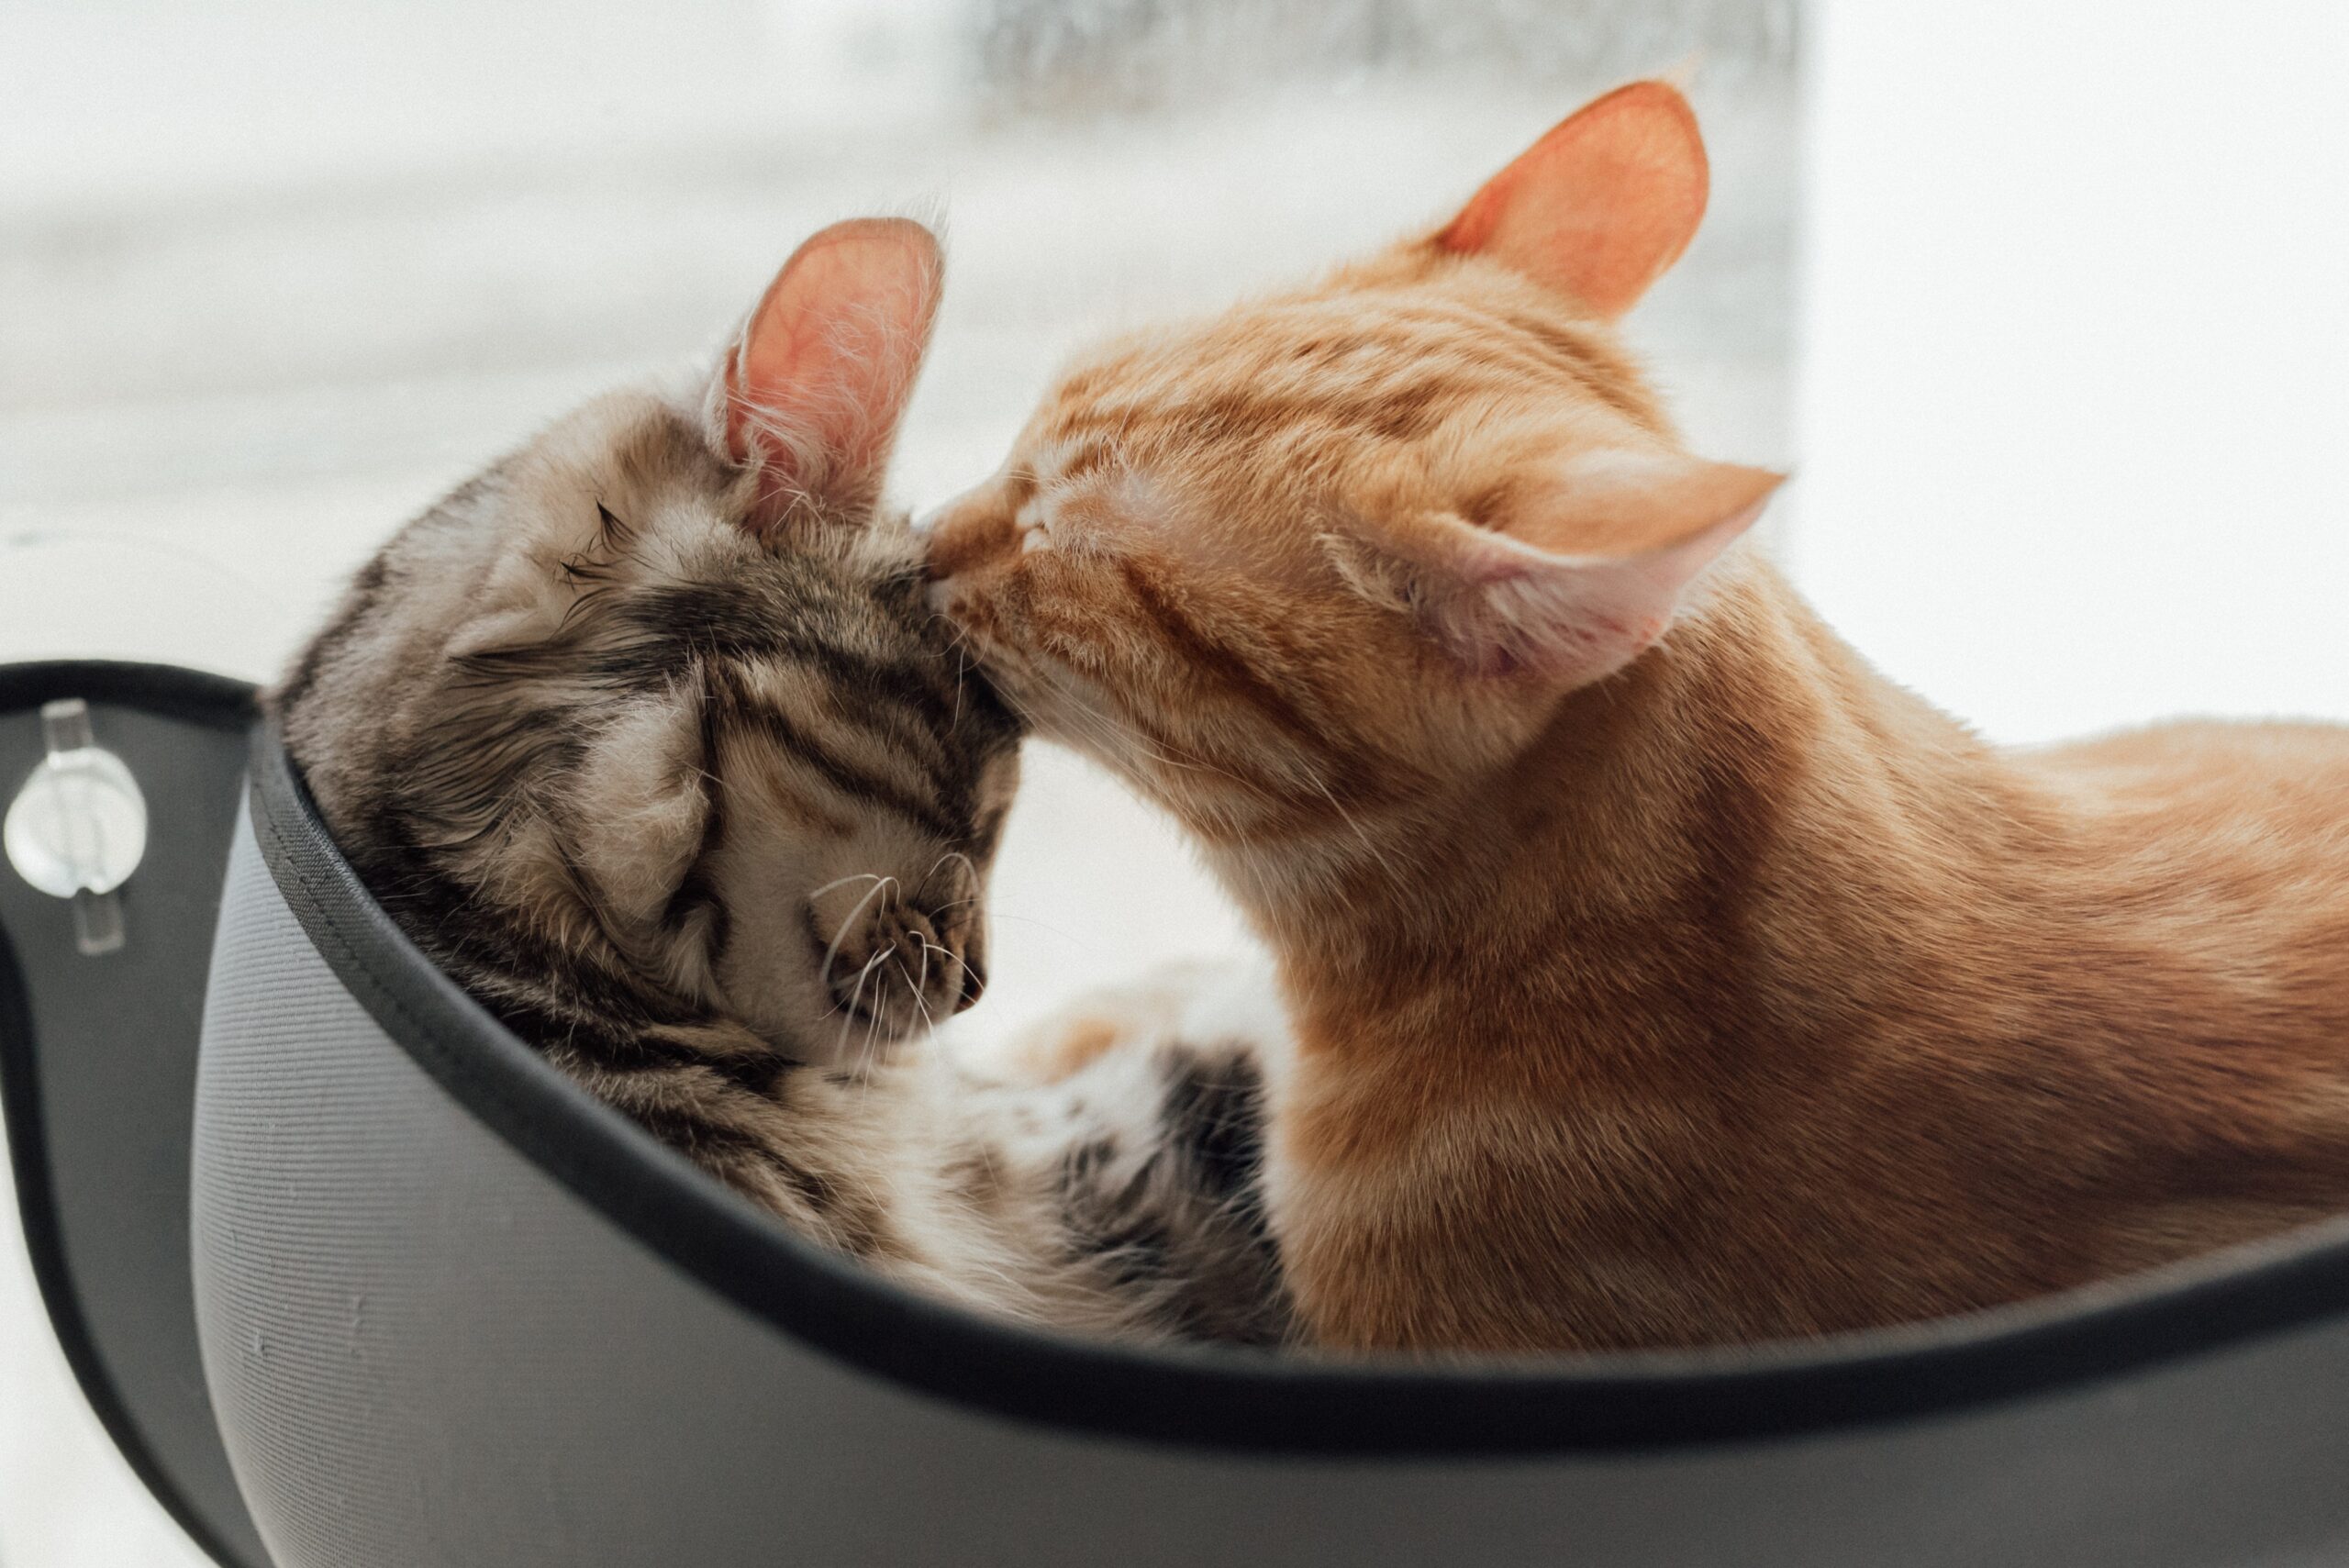 ginger cat licks other cat